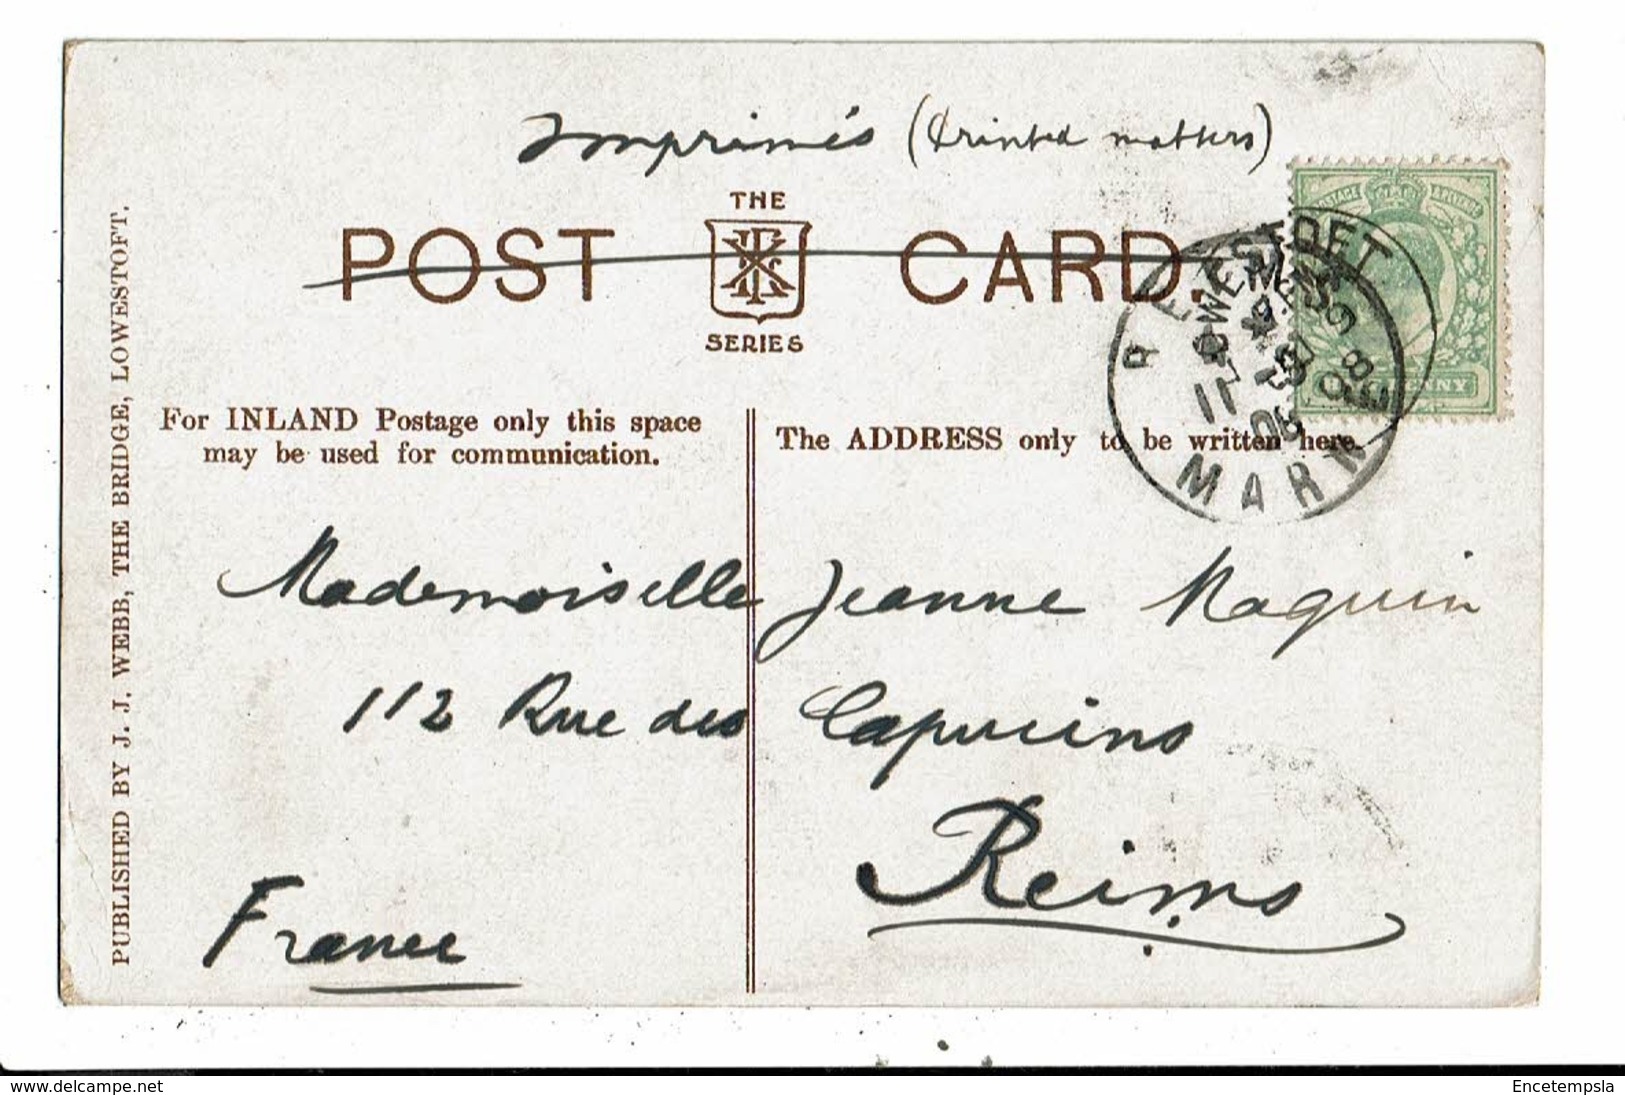 CPA-Carte Postale-Royaume Uni- Lowestoft - The Wellington Esplanade -1908 VM10179 - Lowestoft